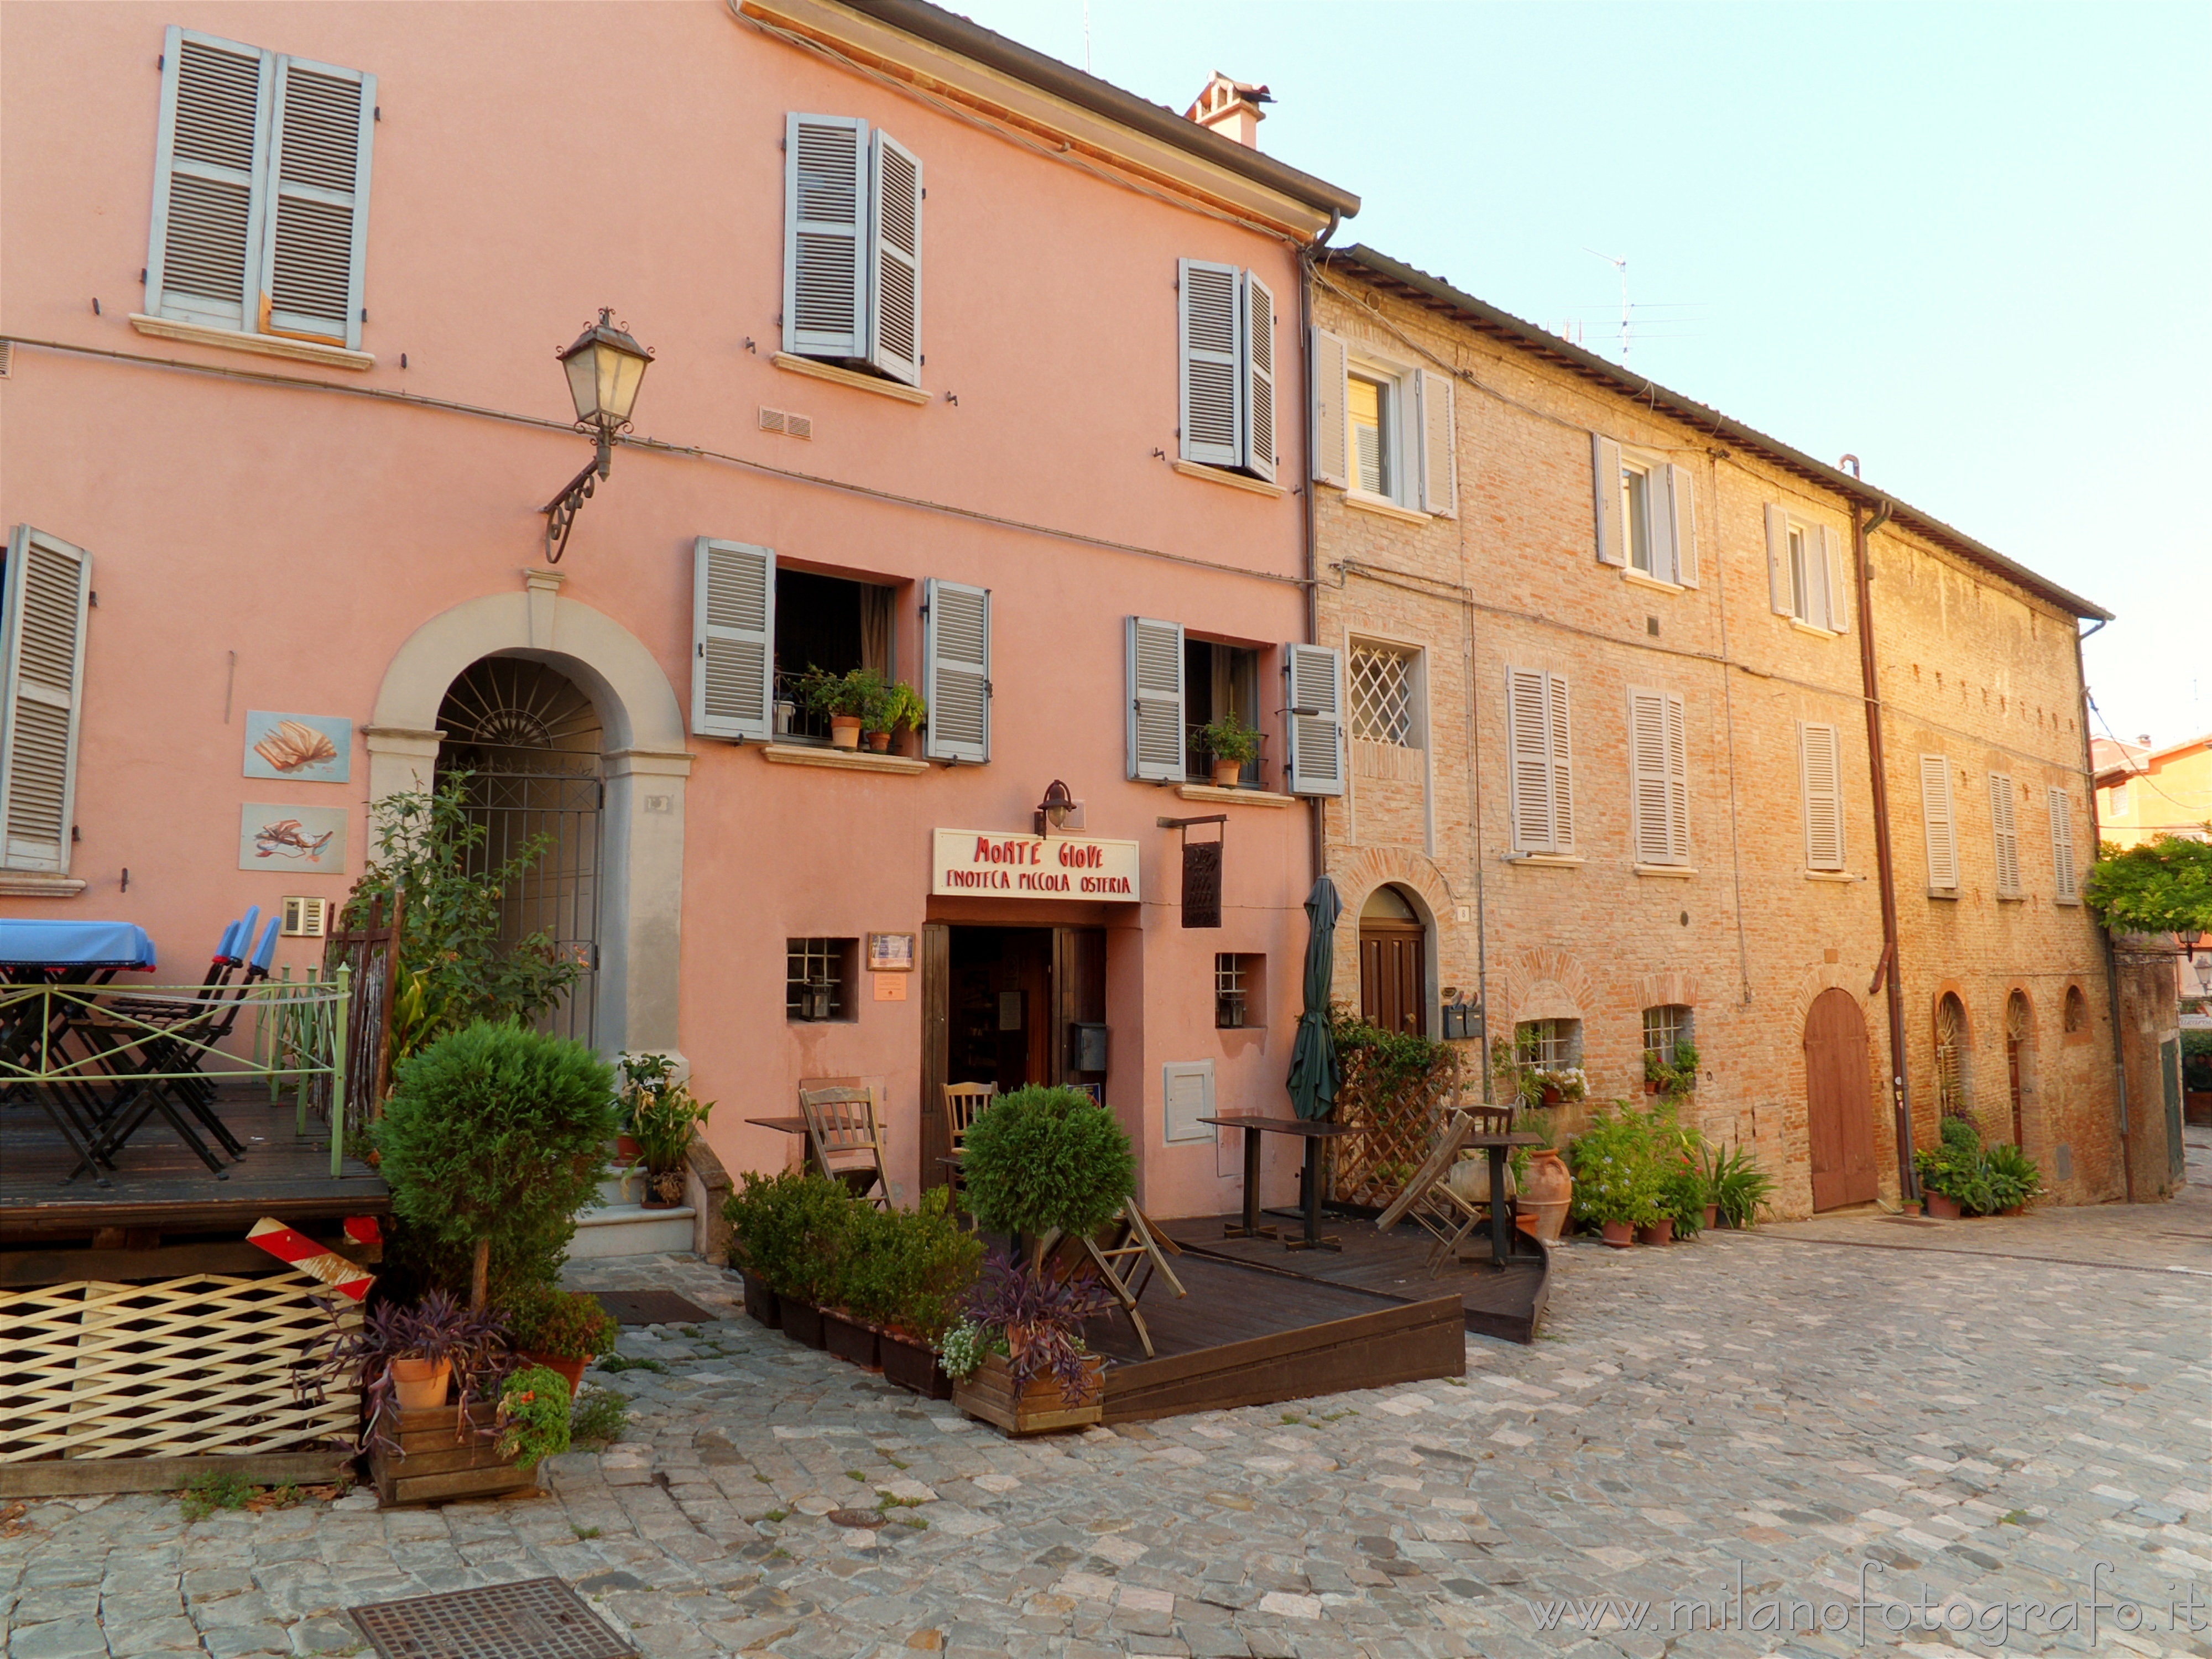 Santarcangelo di Romagna (Rimini, Italy): Wine shop tavern Monte Giove - Santarcangelo di Romagna (Rimini, Italy)